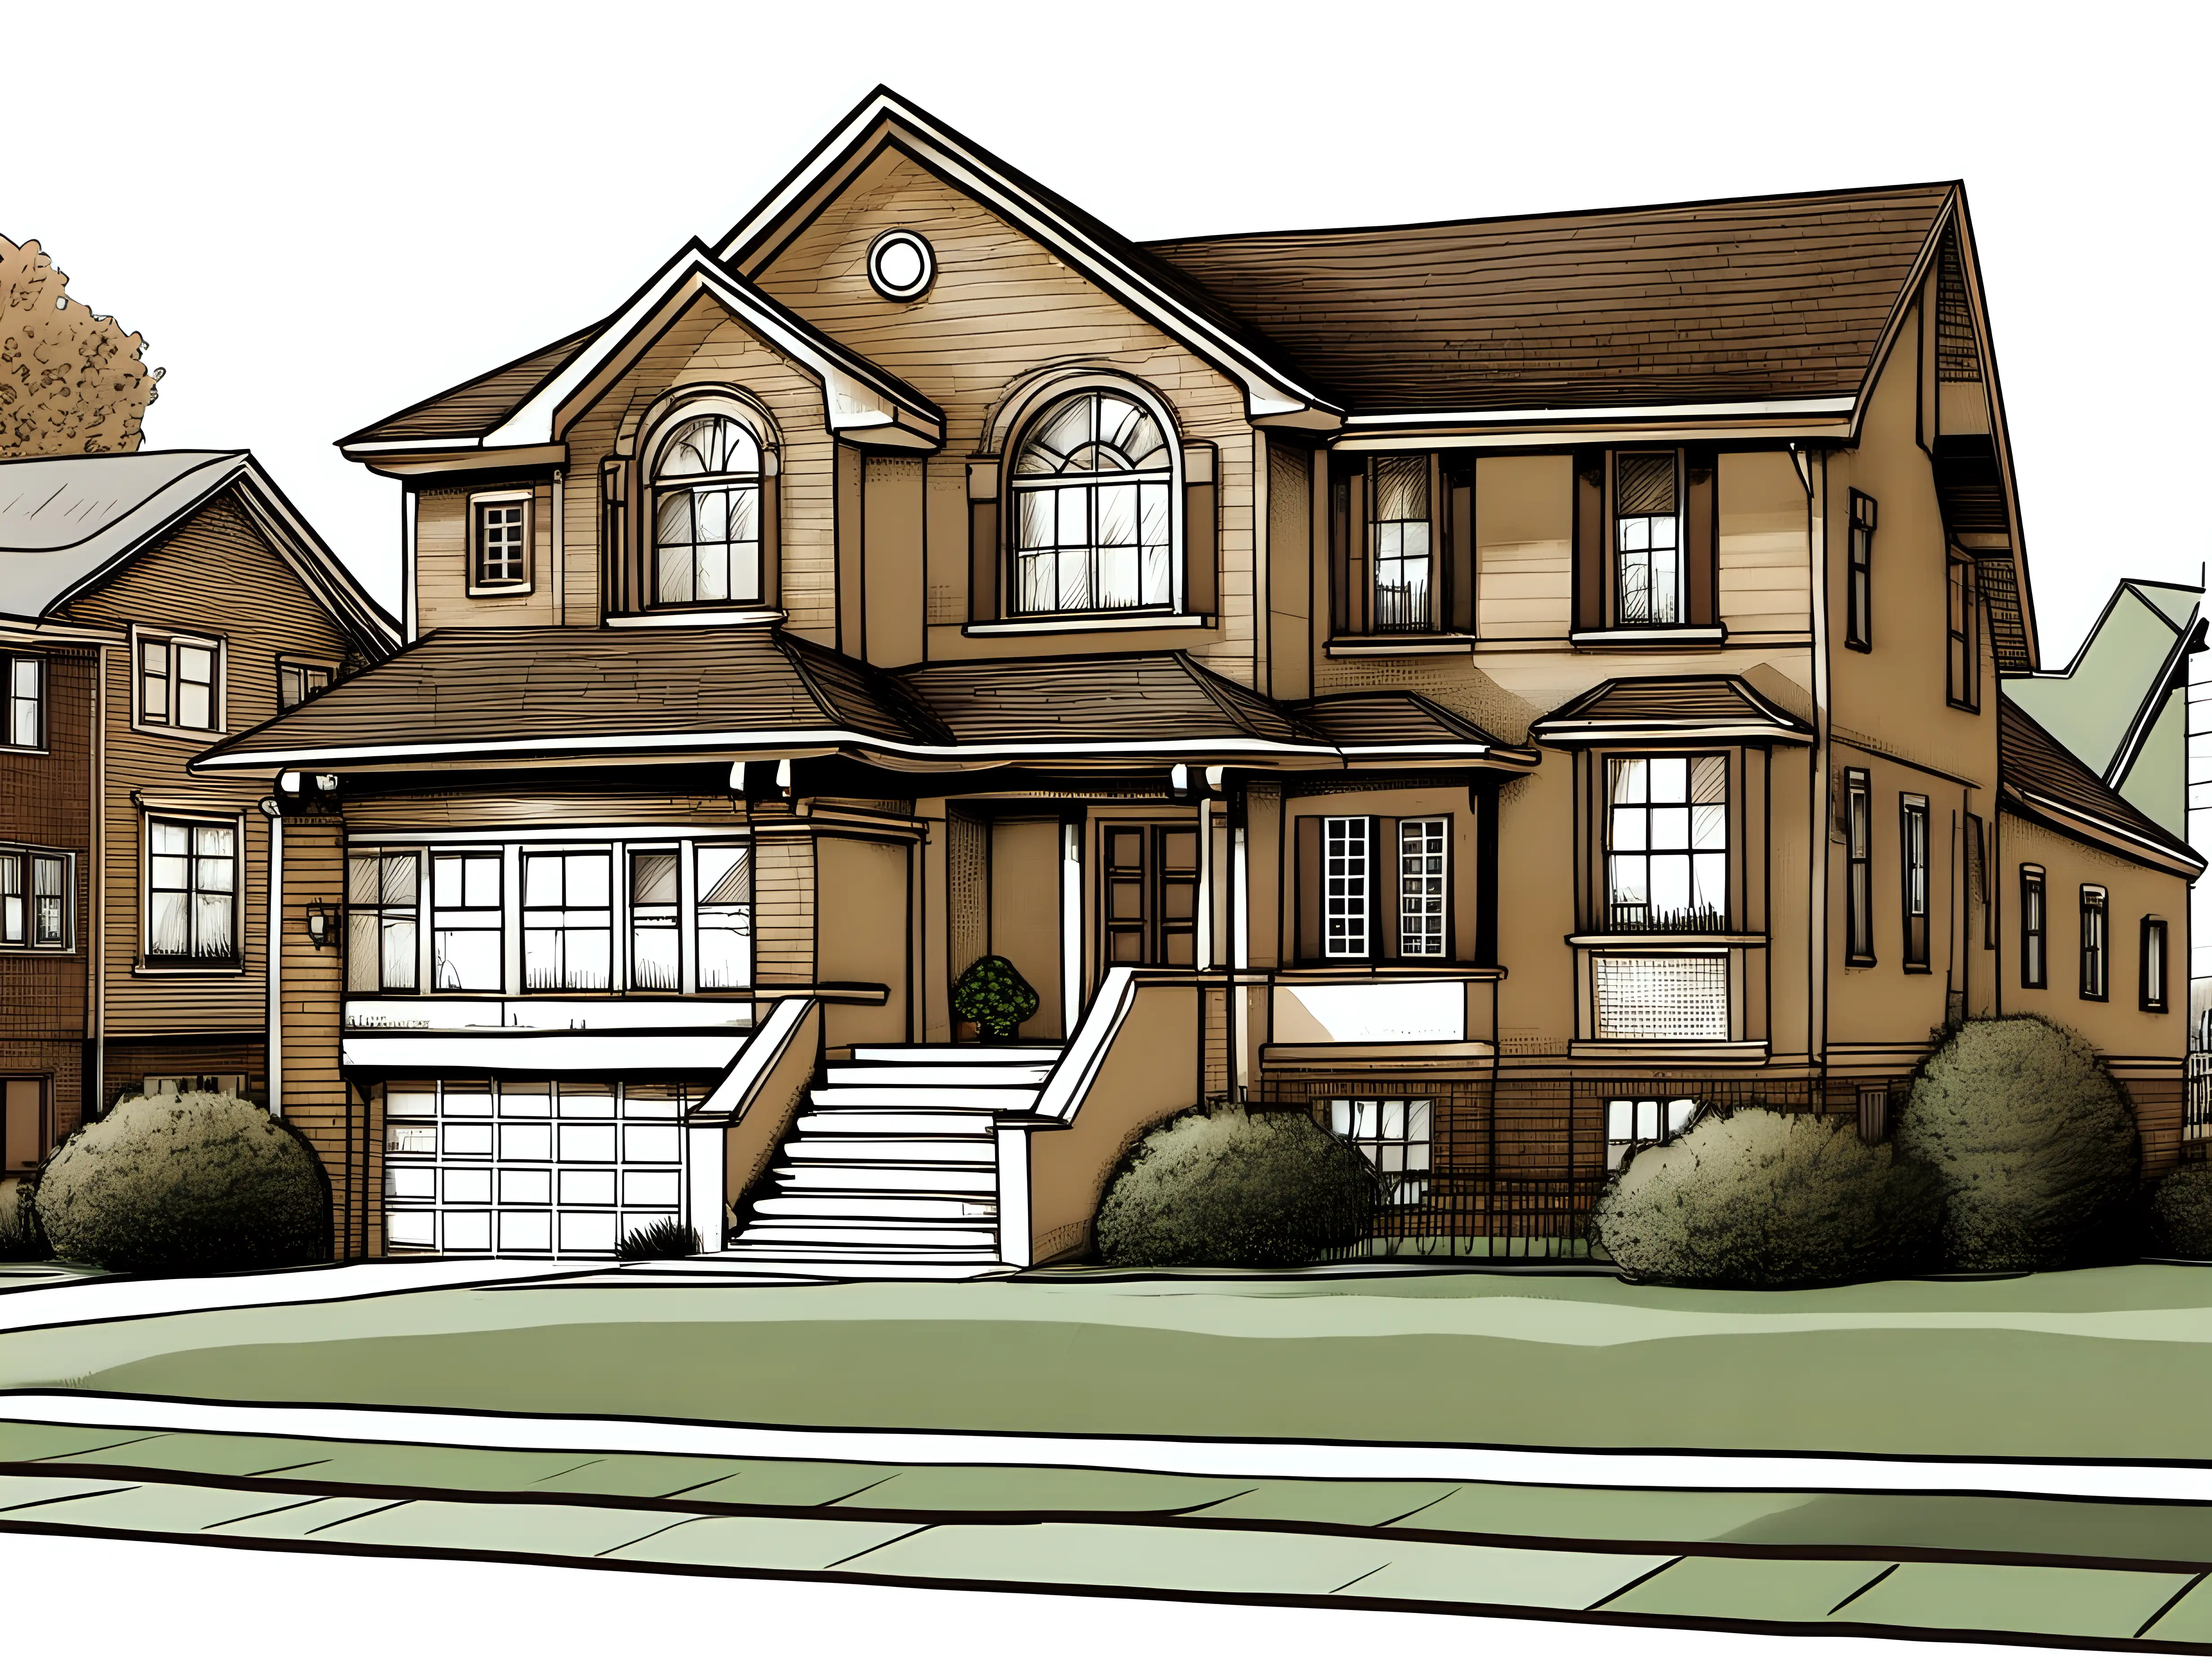 Suburban Neighborhood with Large Brown House Illustration